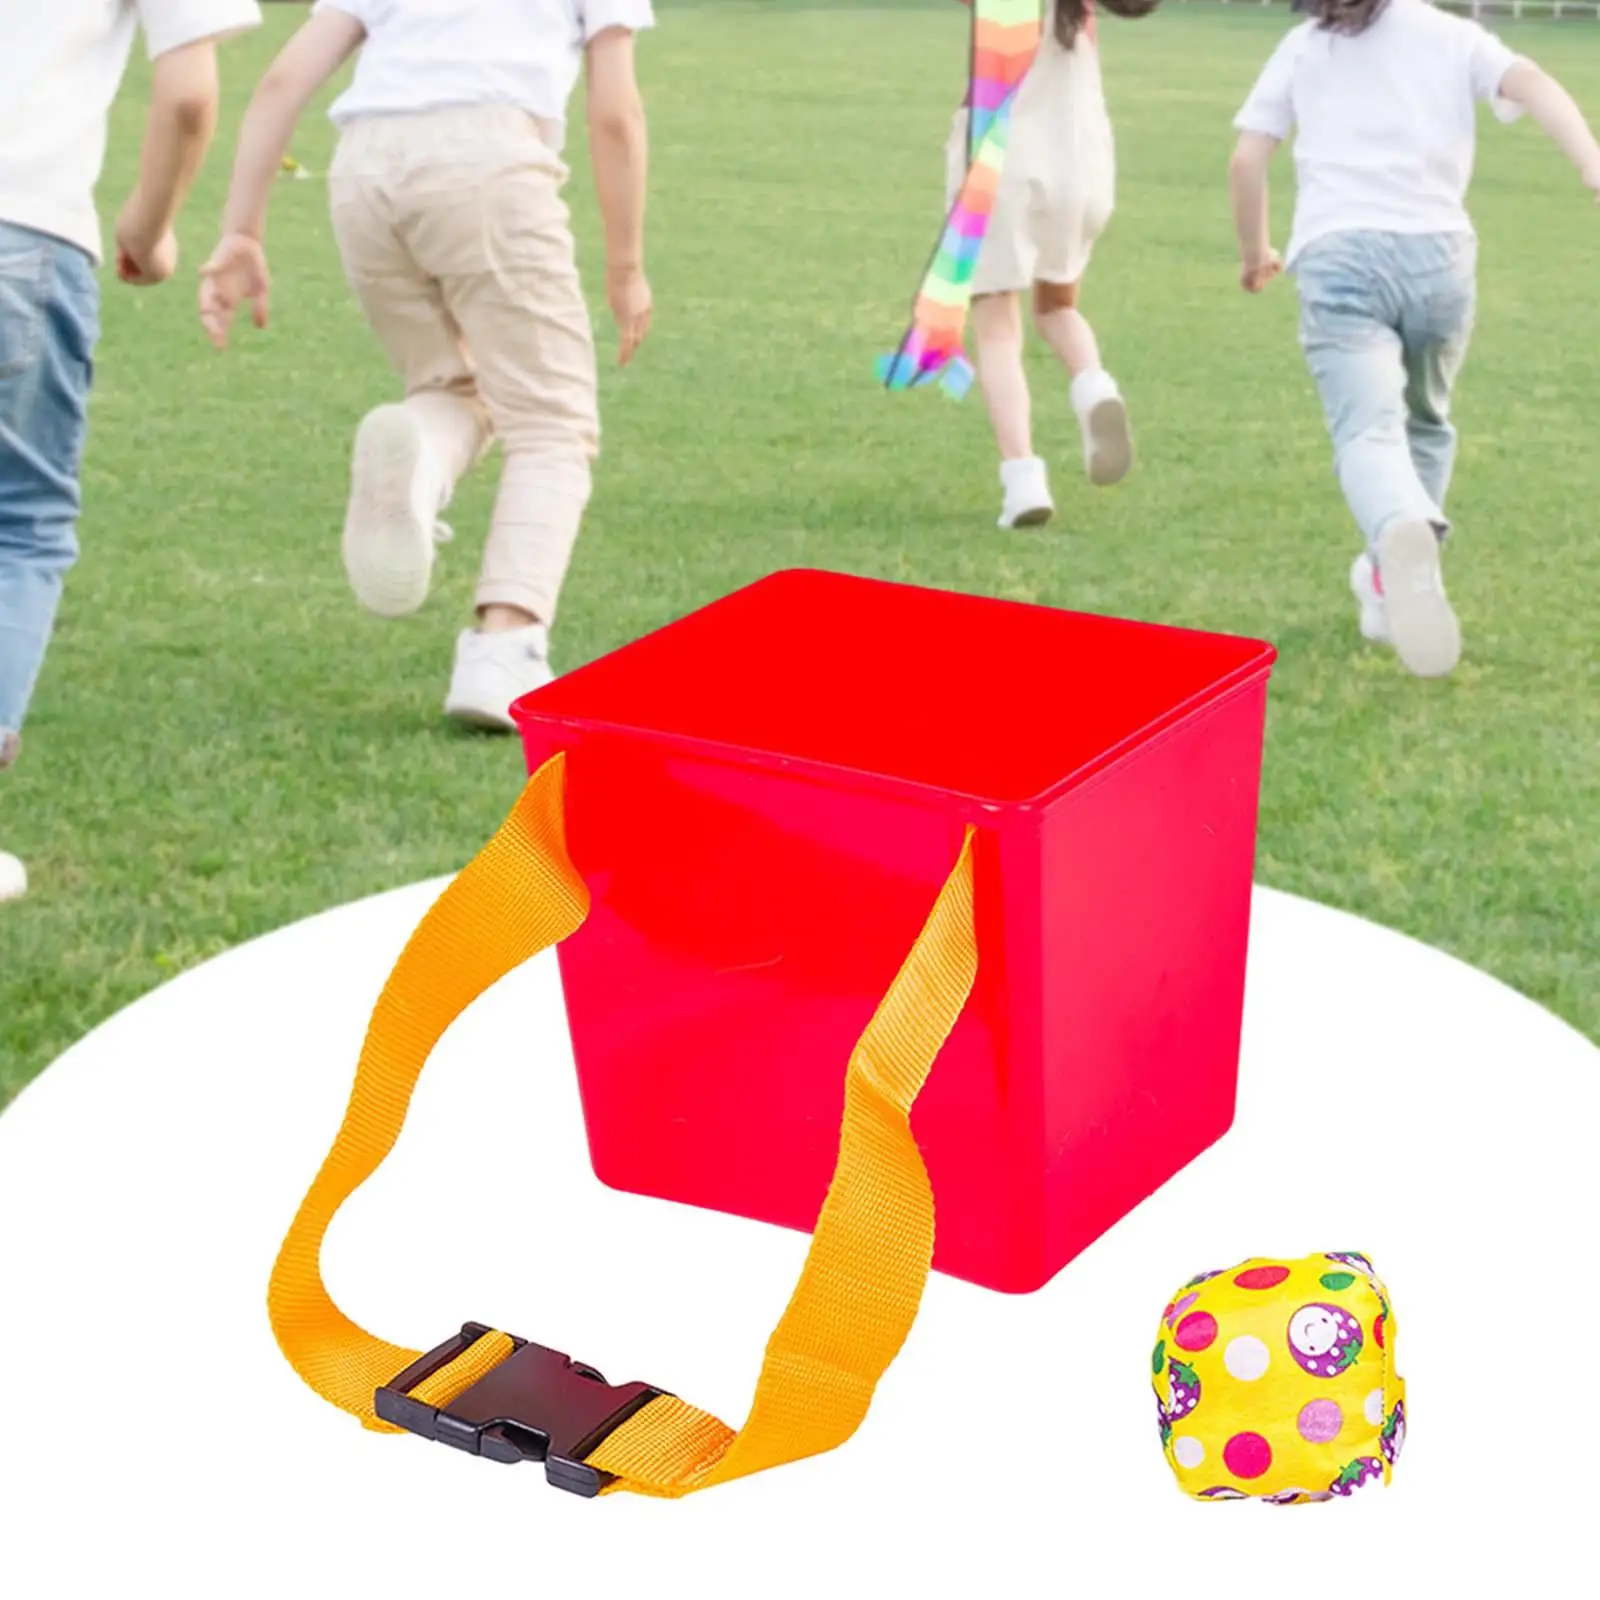 Sandbag Buckets Toss Game Kids Fitness Equipment for Games Party